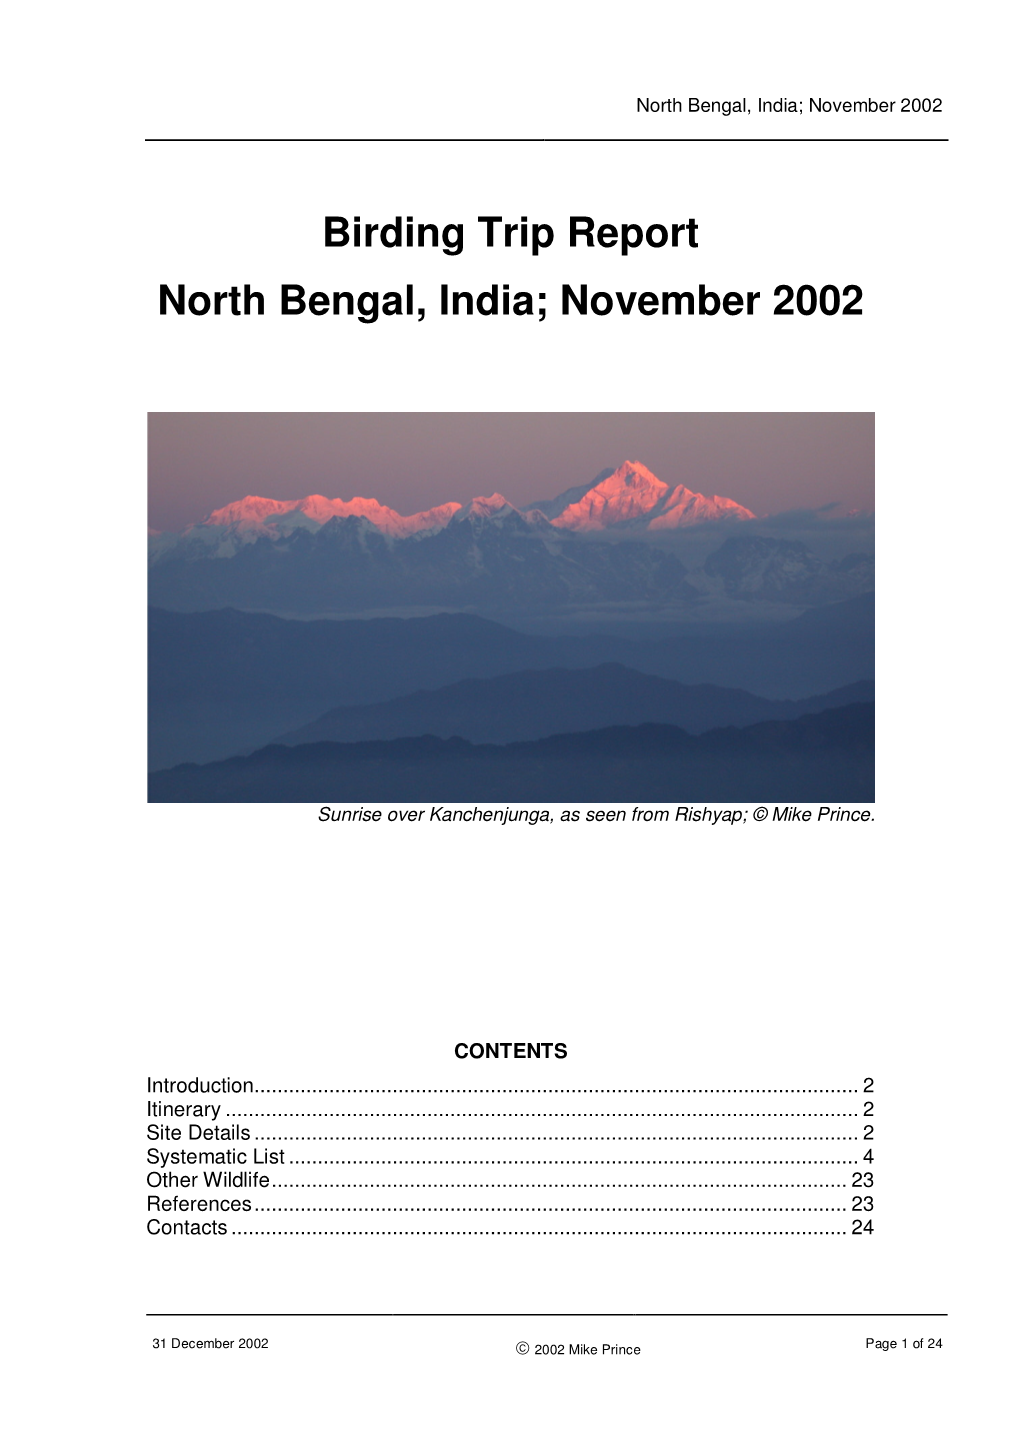 Birding Trip Report North Bengal, India; November 2002